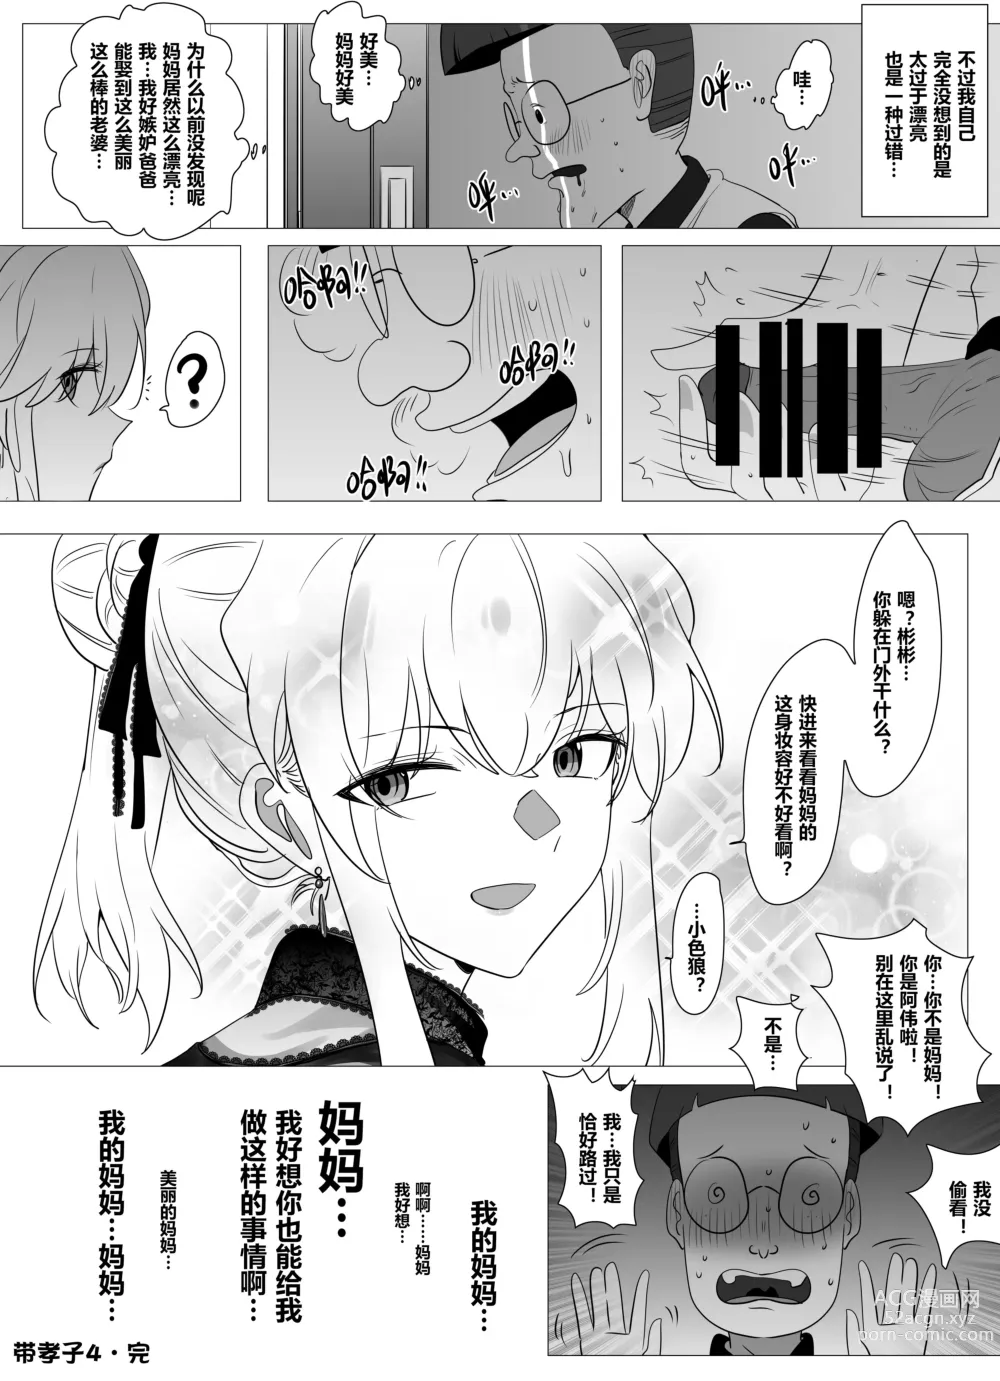 Page 12 of doujinshi 带孝子4